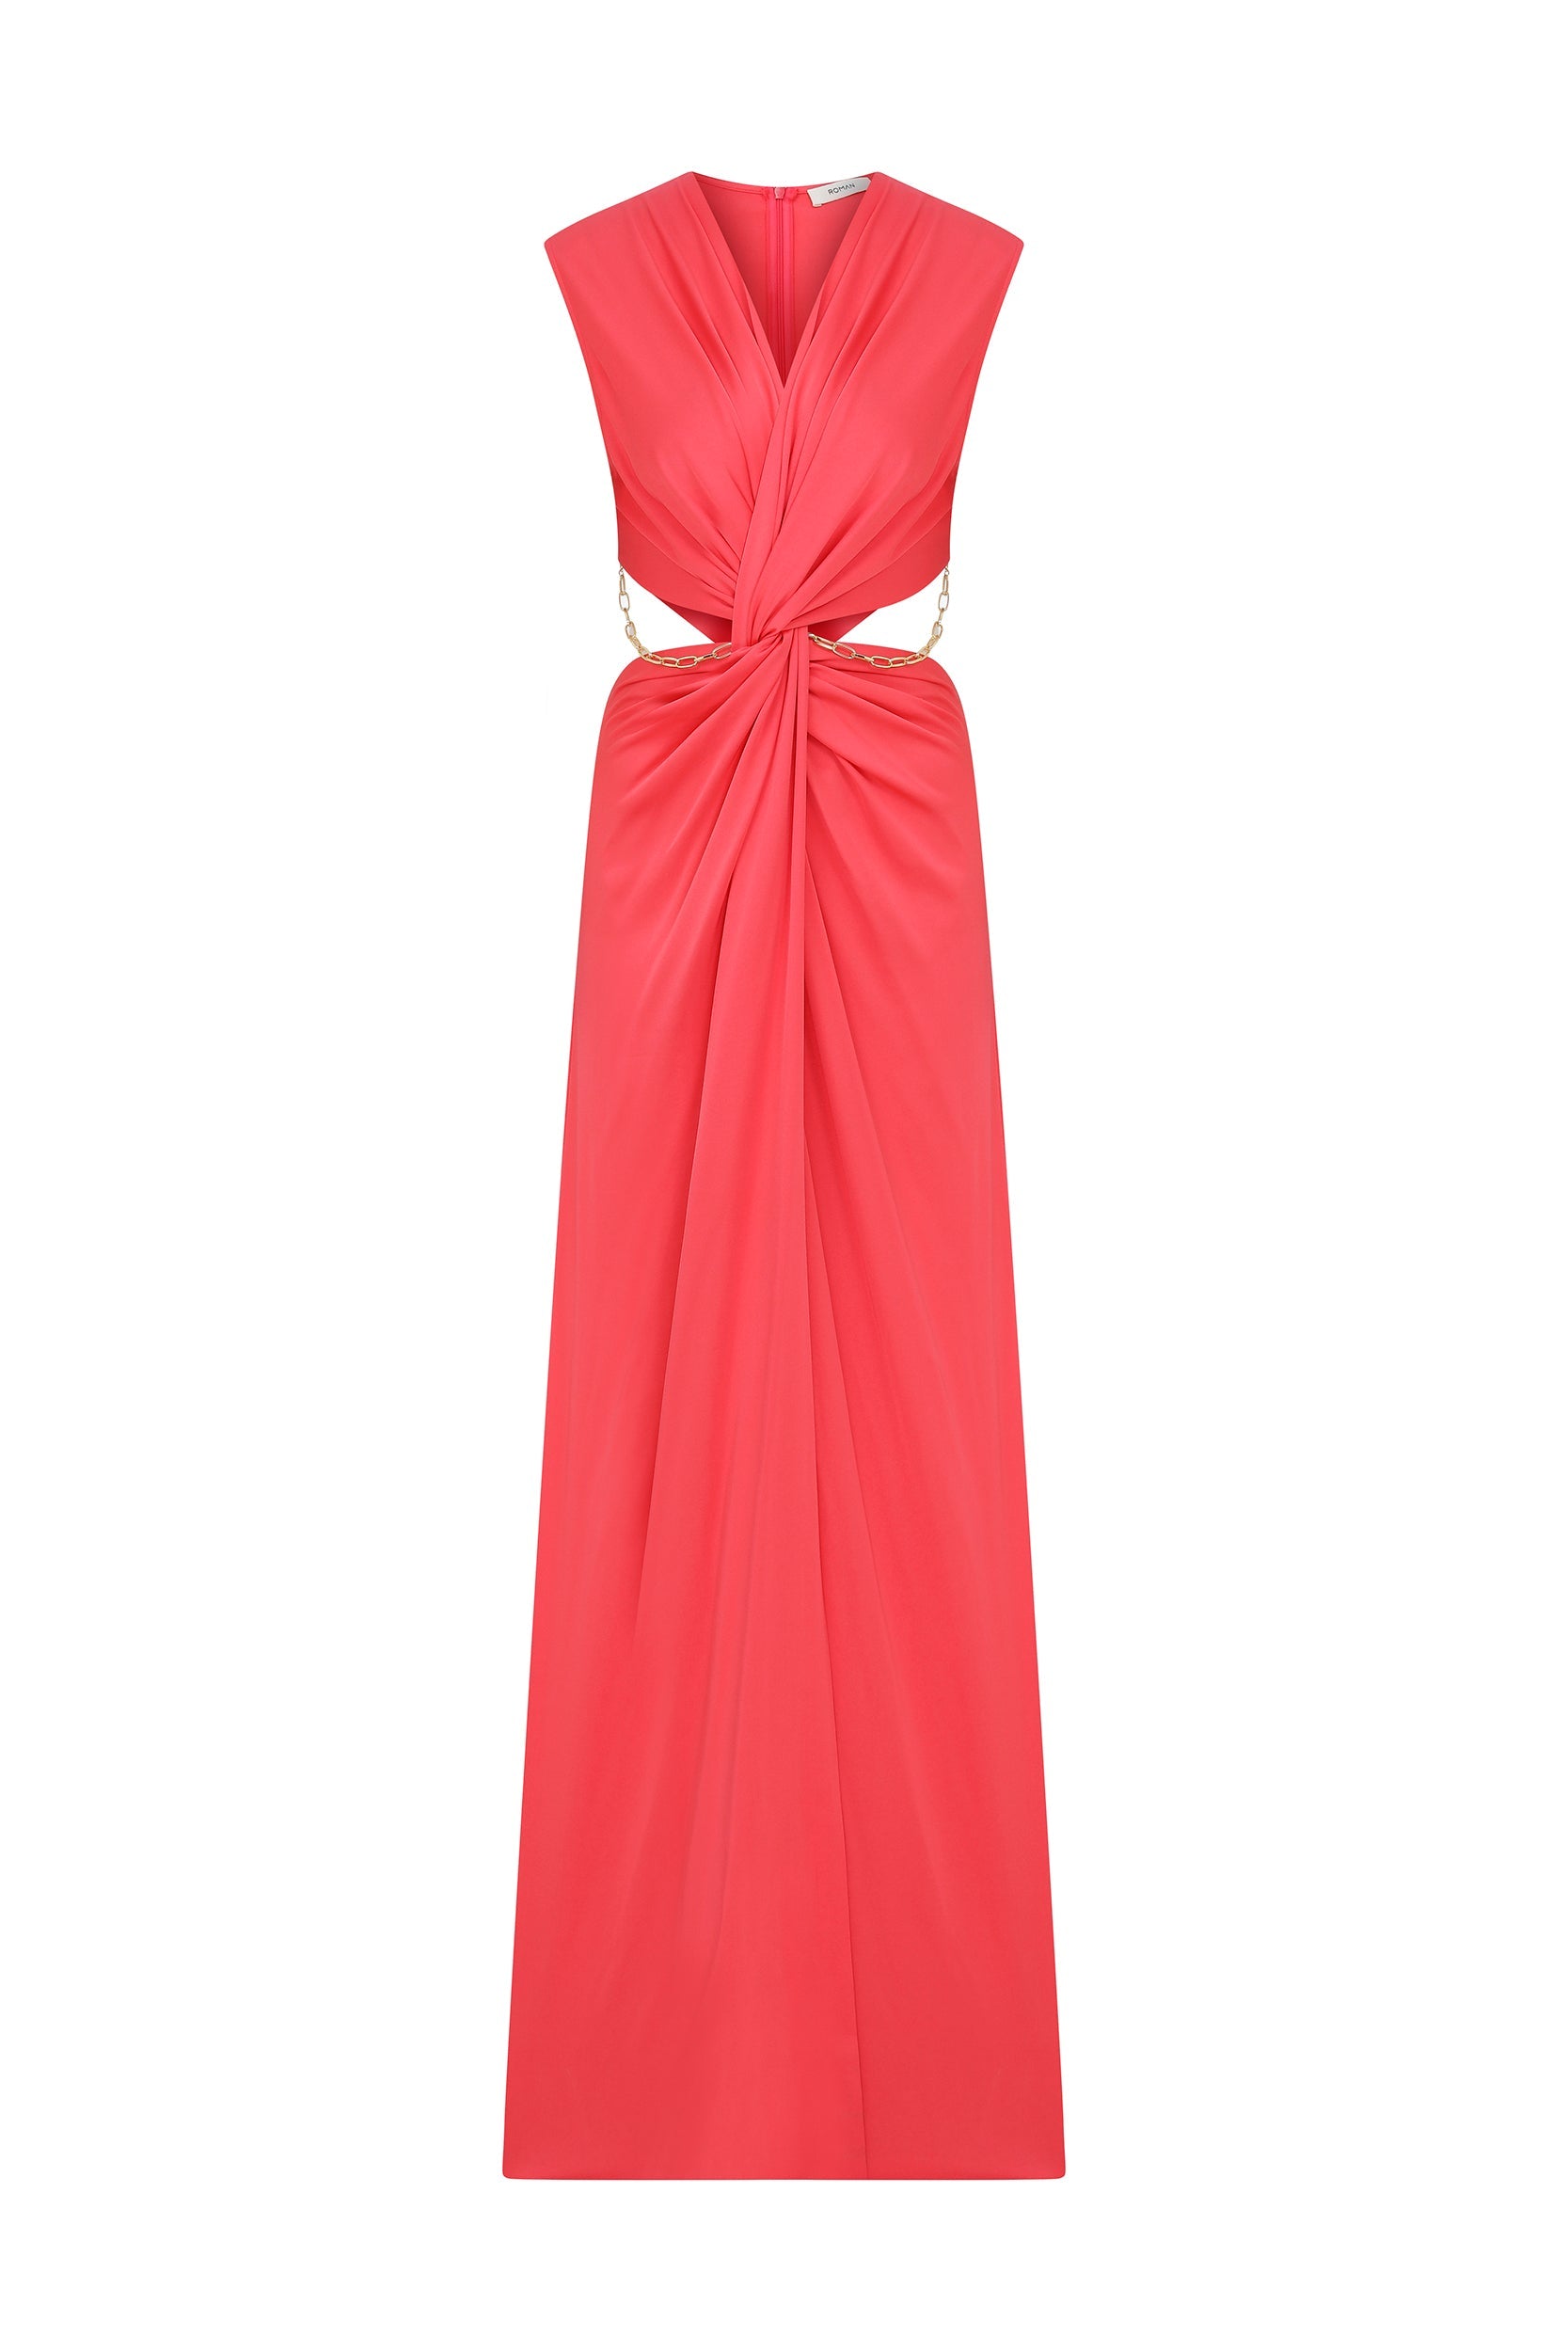 Roman Pink Chain Detailed Evening Dress. 2